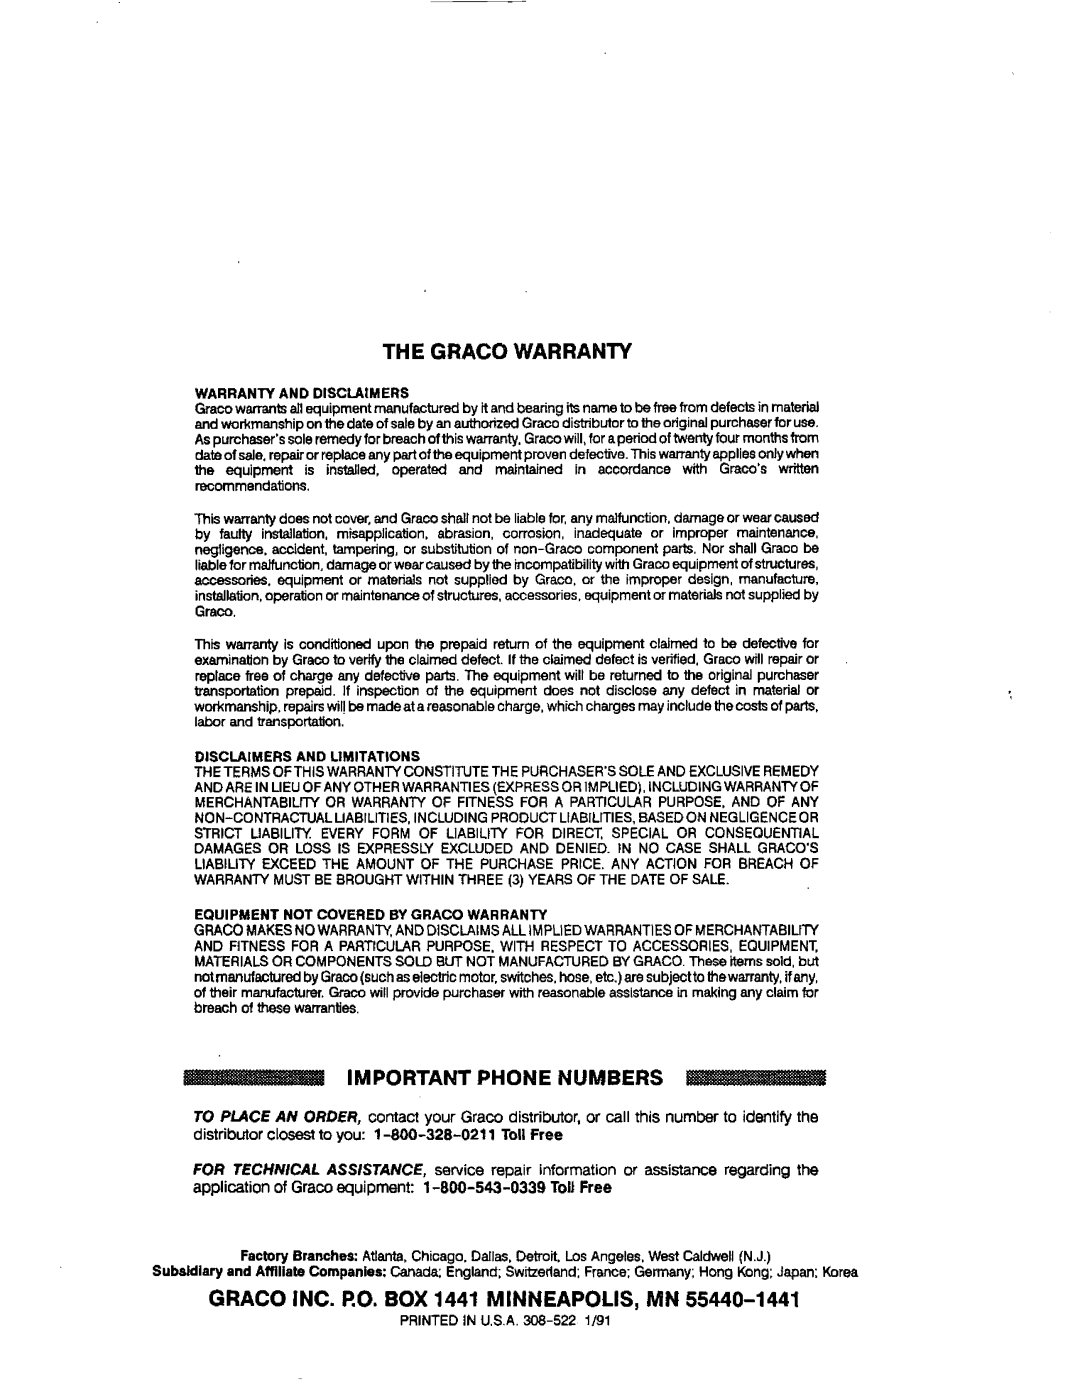 Graco Inc 800-345, 308-522, 4040 manual The Gracowarranty, Important Phone Numbers, GRACO INC. PO.BOX 1441 MINNEAPOLIS,MN 